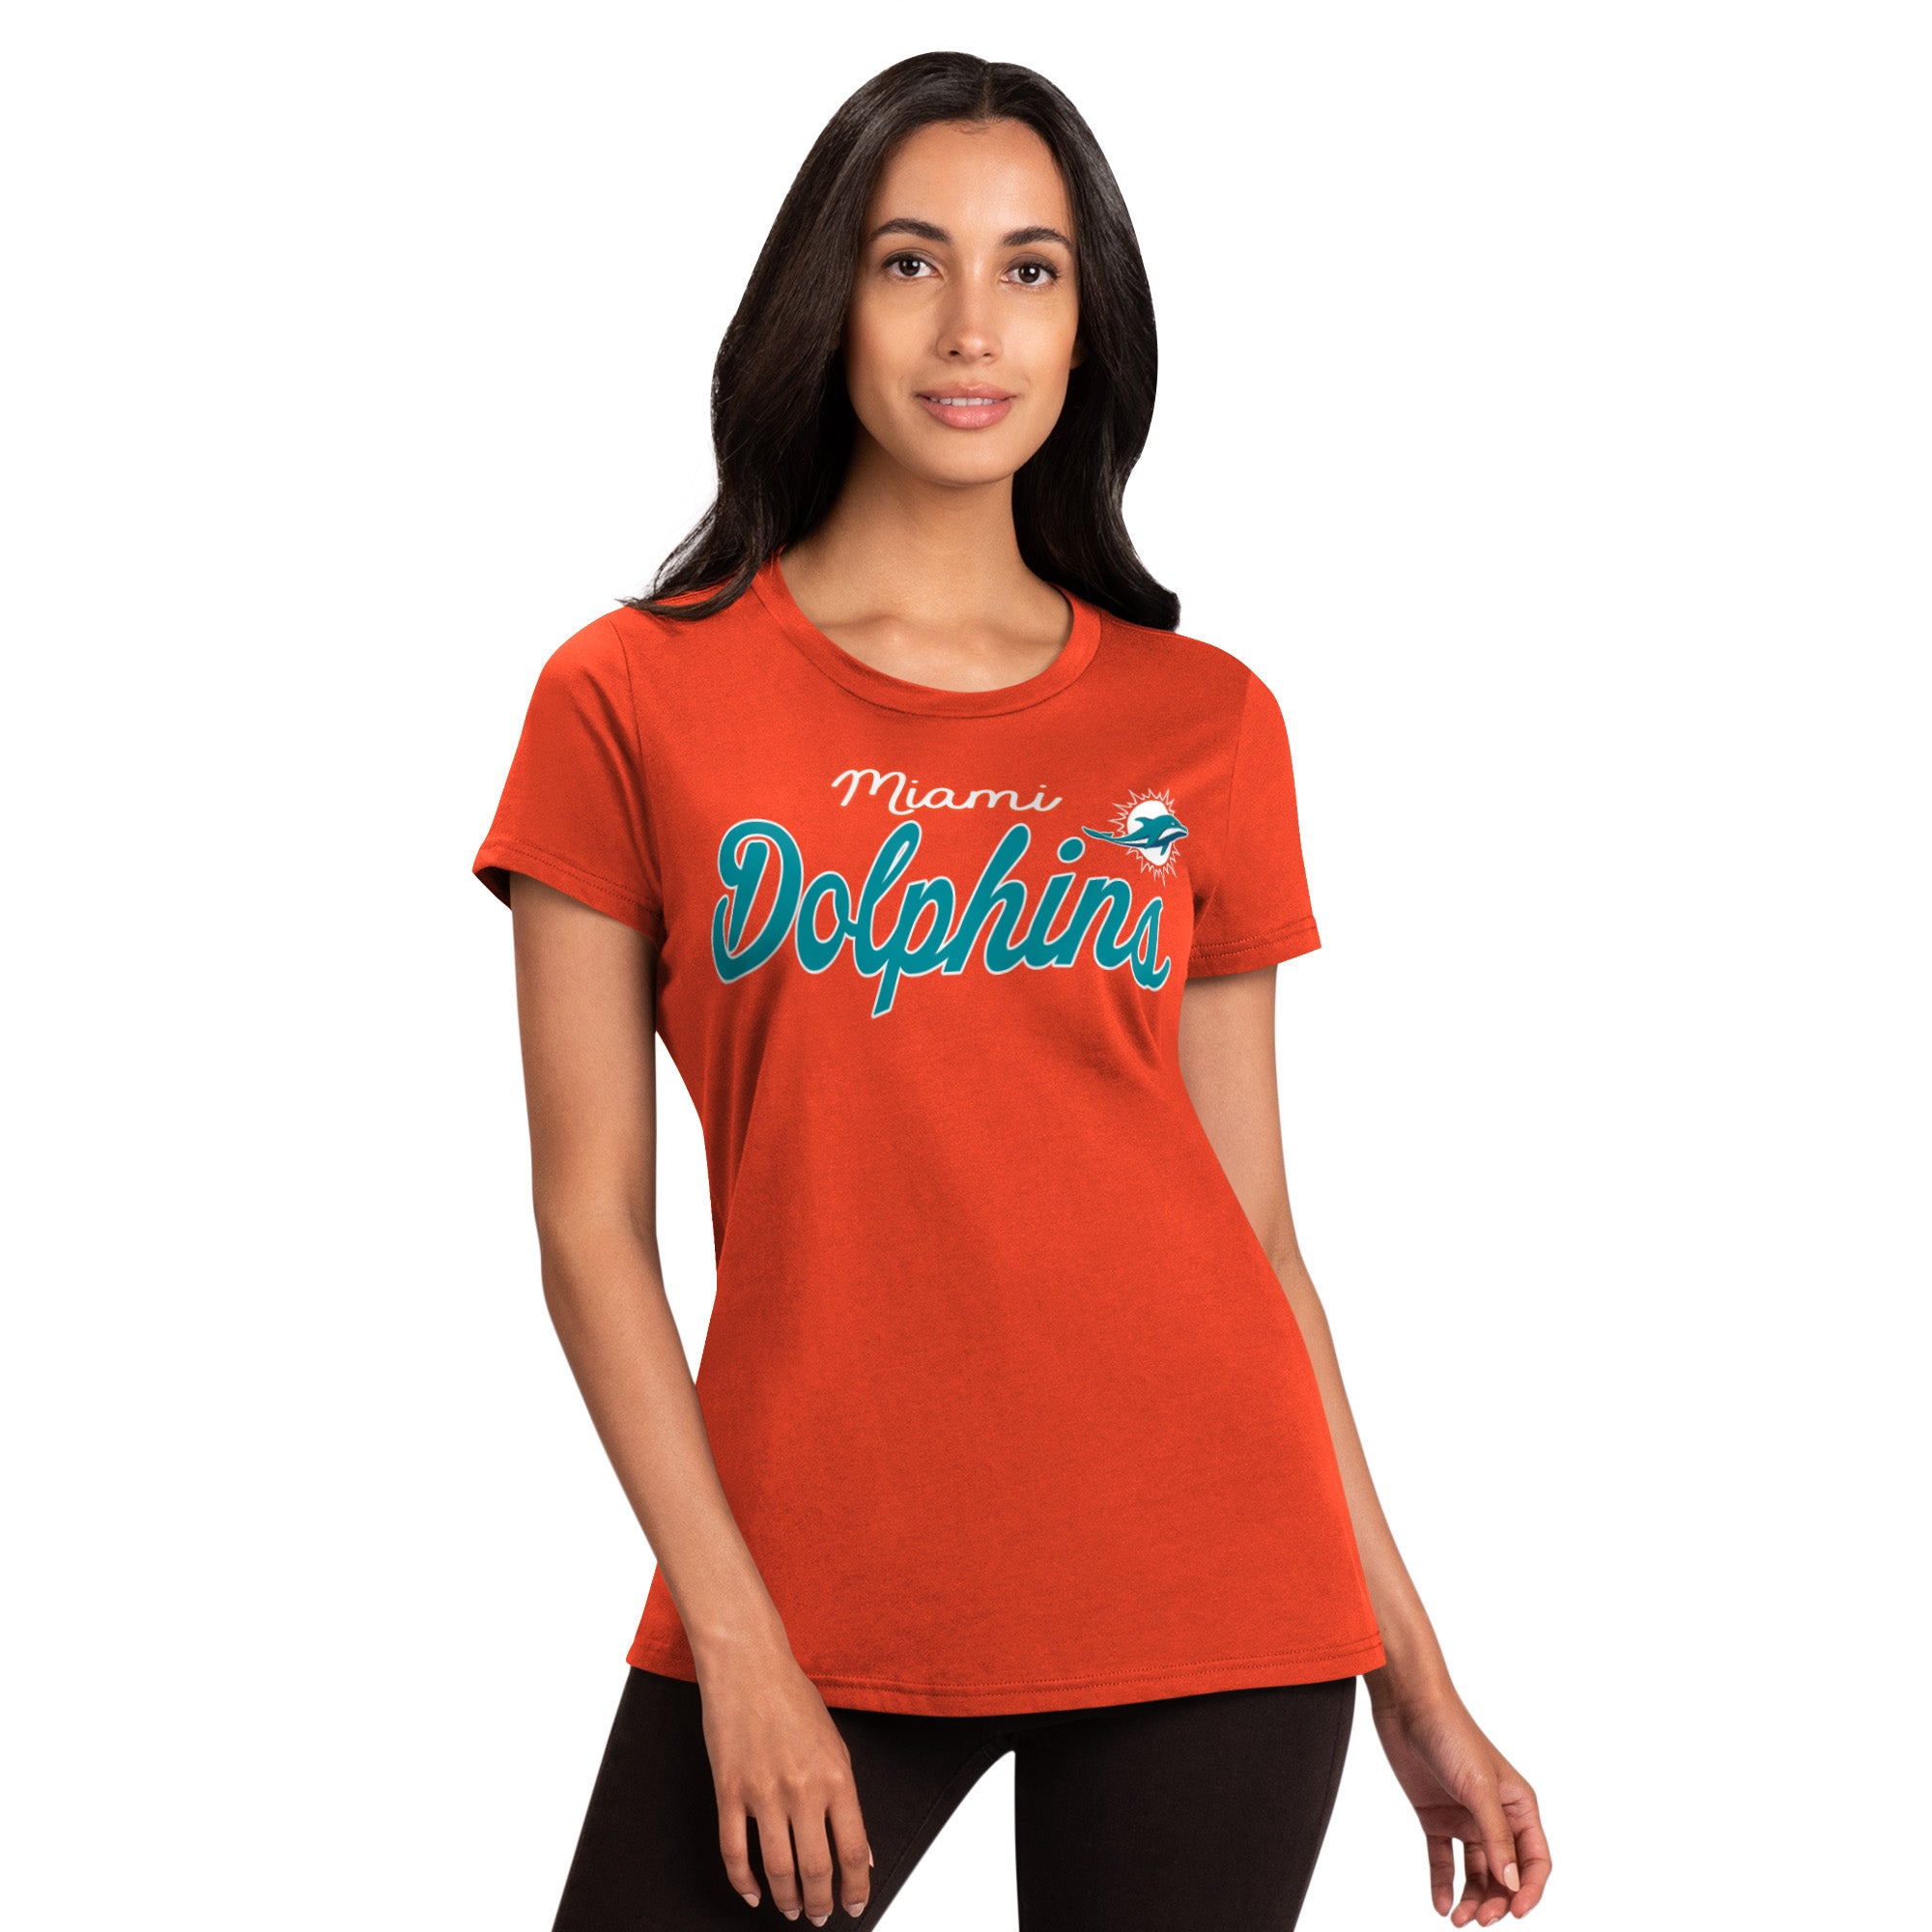 Miami Dolphins Women's Record Setter T-Shirt - Orange